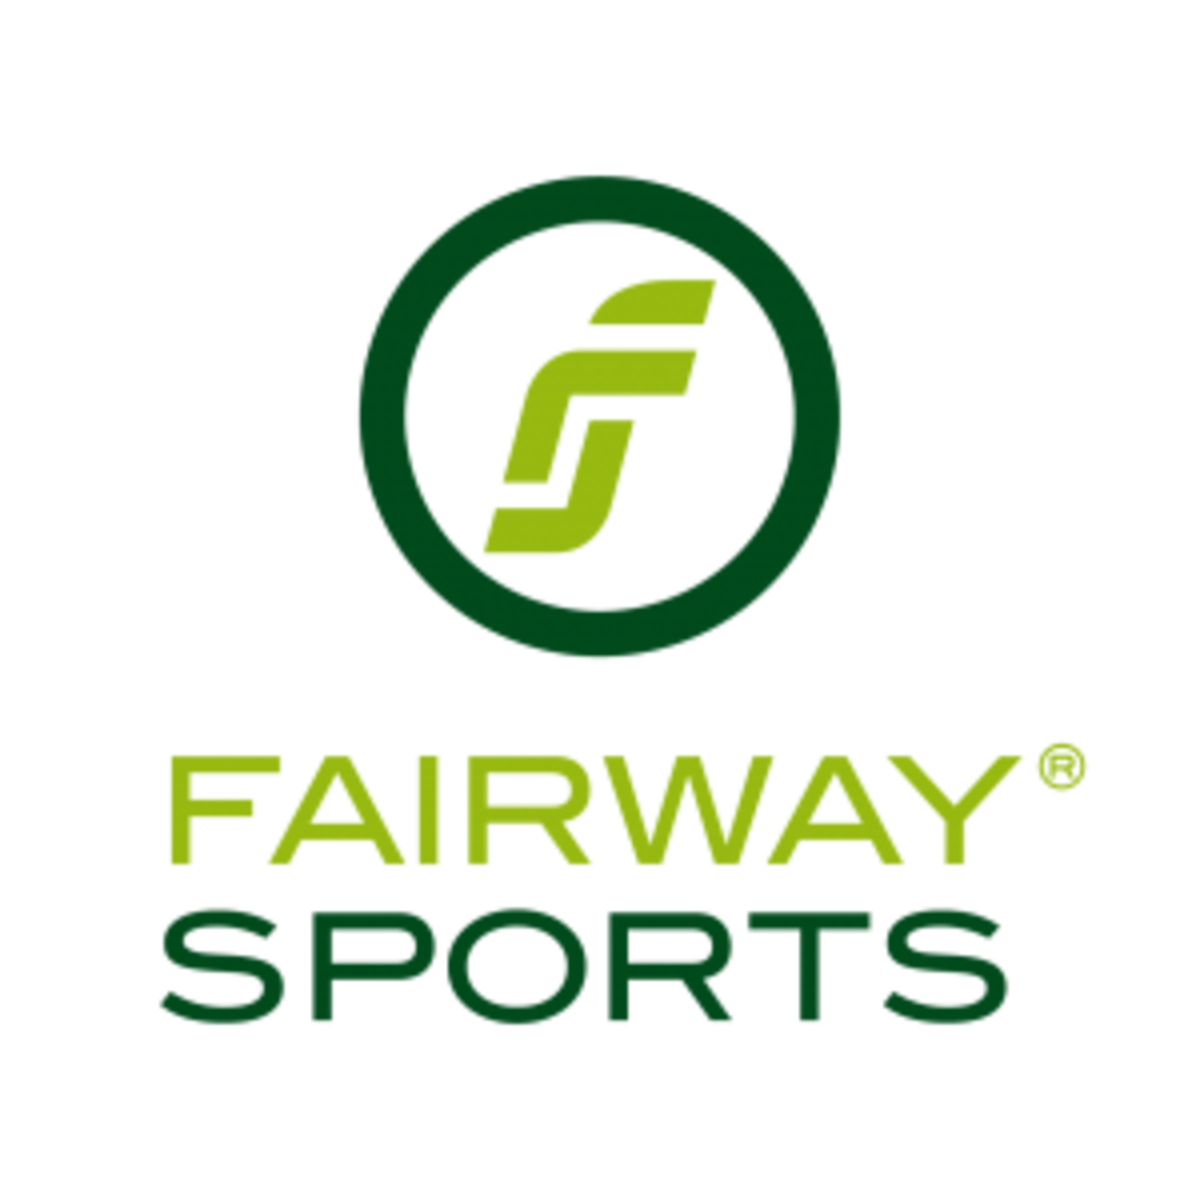 The logo of the golf marketing & event agency FairwaySports.